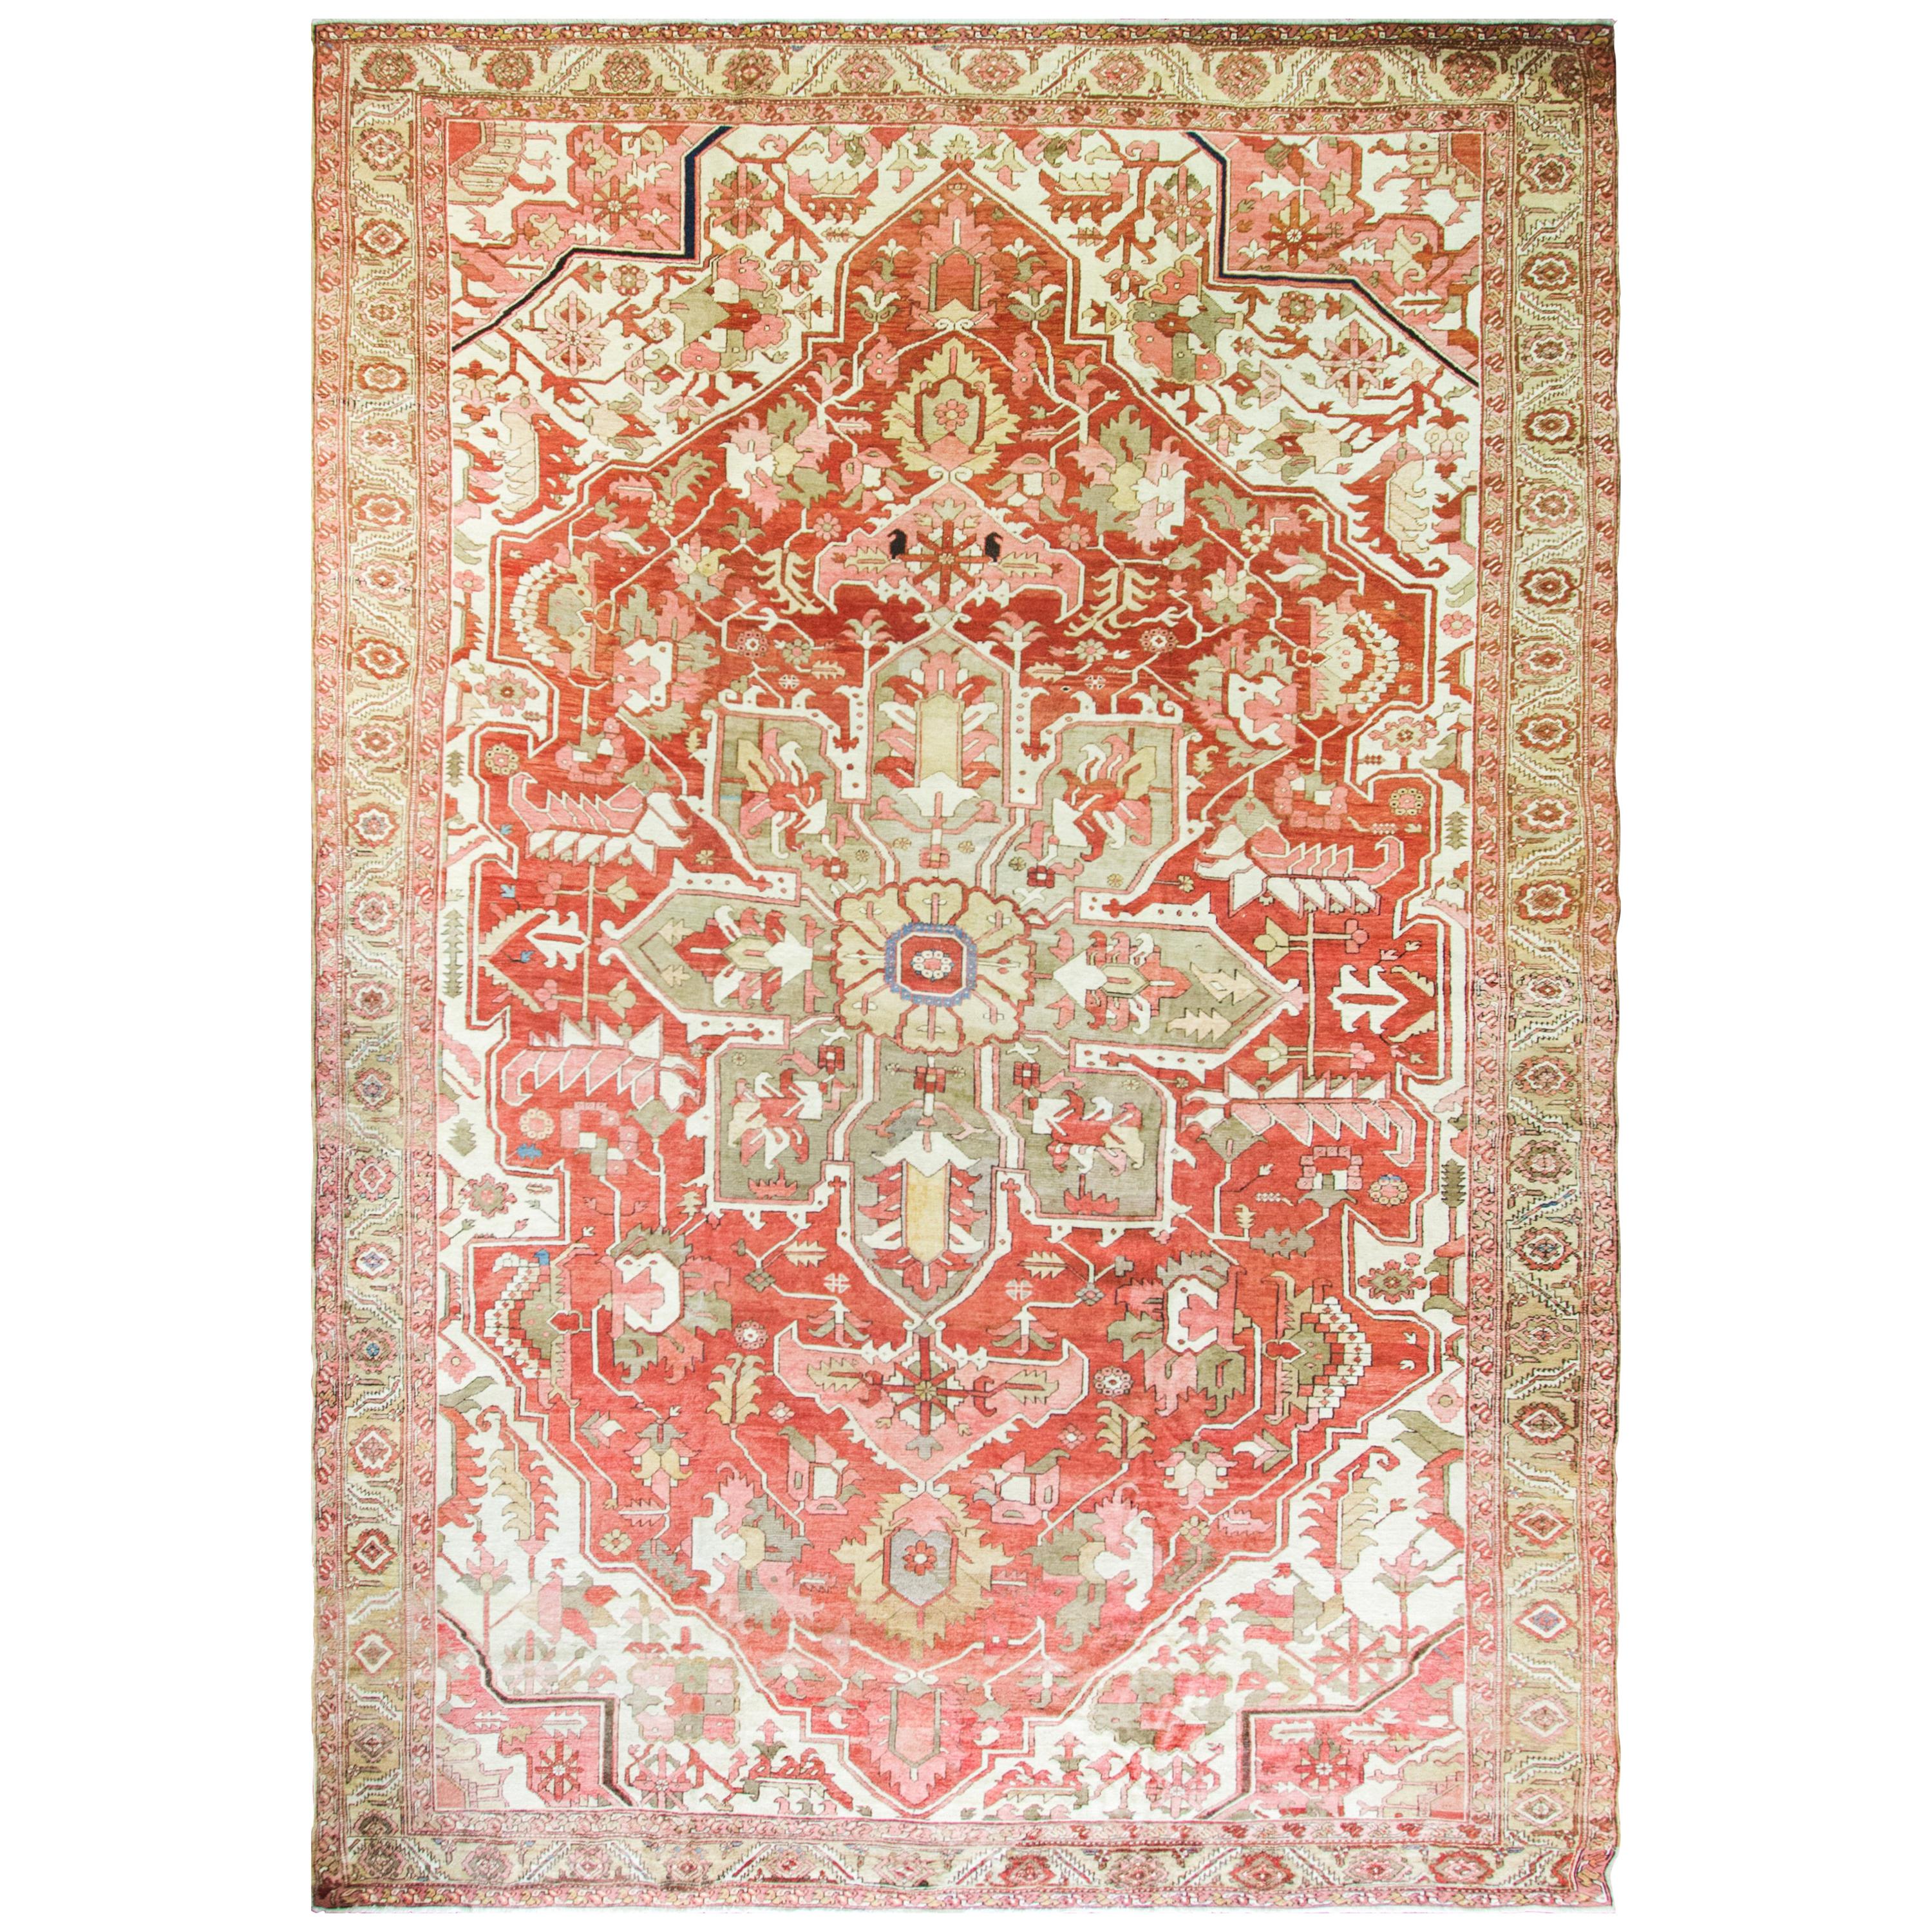  Antiker persischer Serapi-Teppich